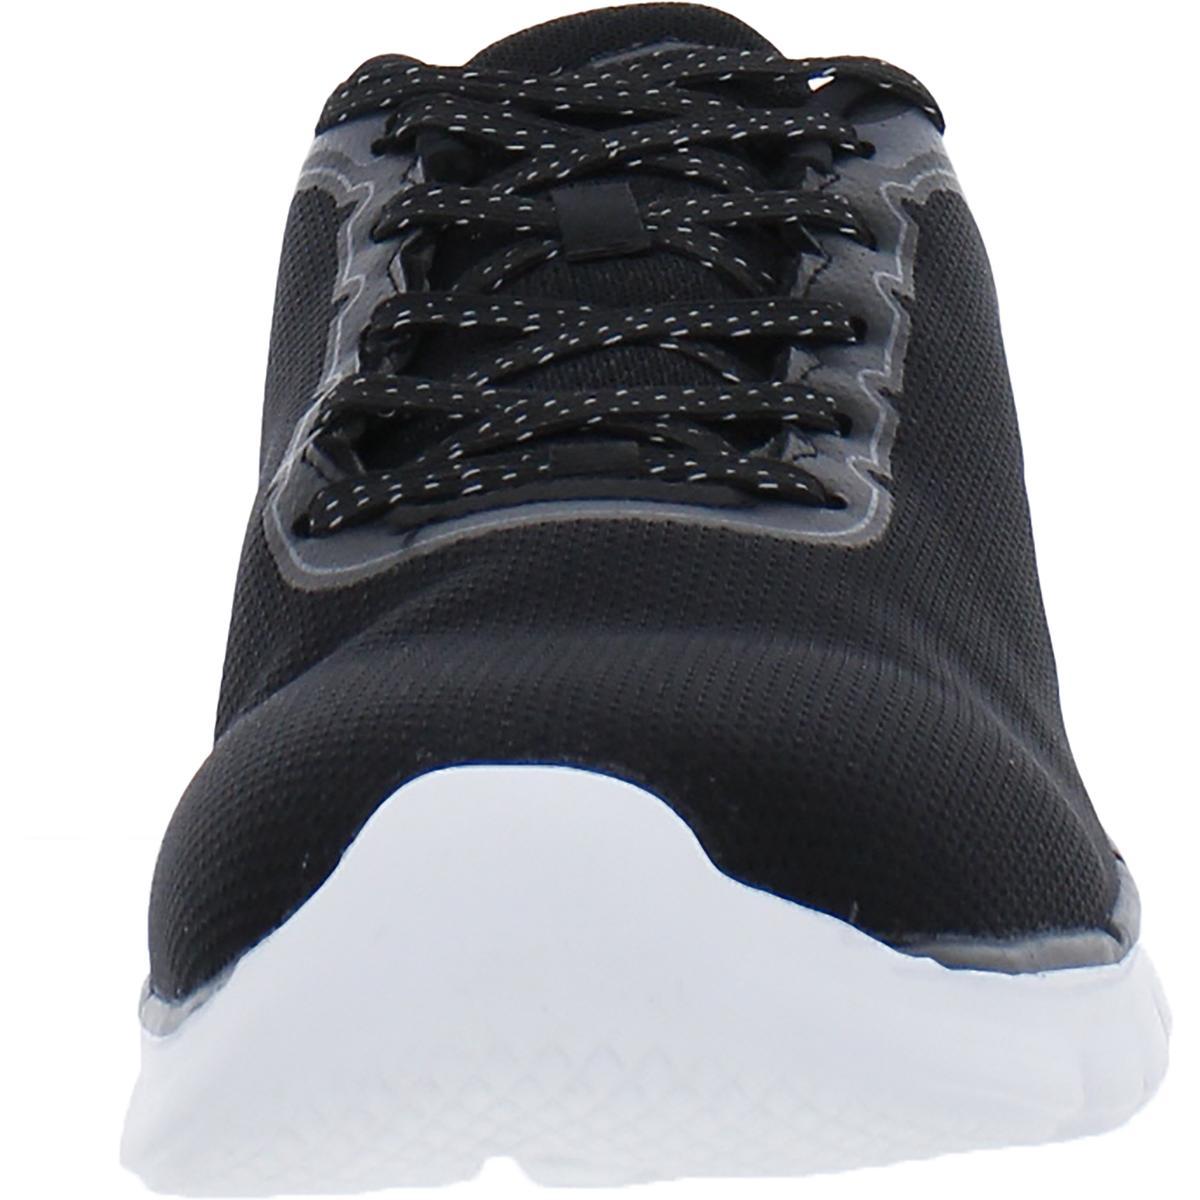 Avia Avi-factor 2.0 Memory Foam Running Athletic And Training Shoes in  Black for Men